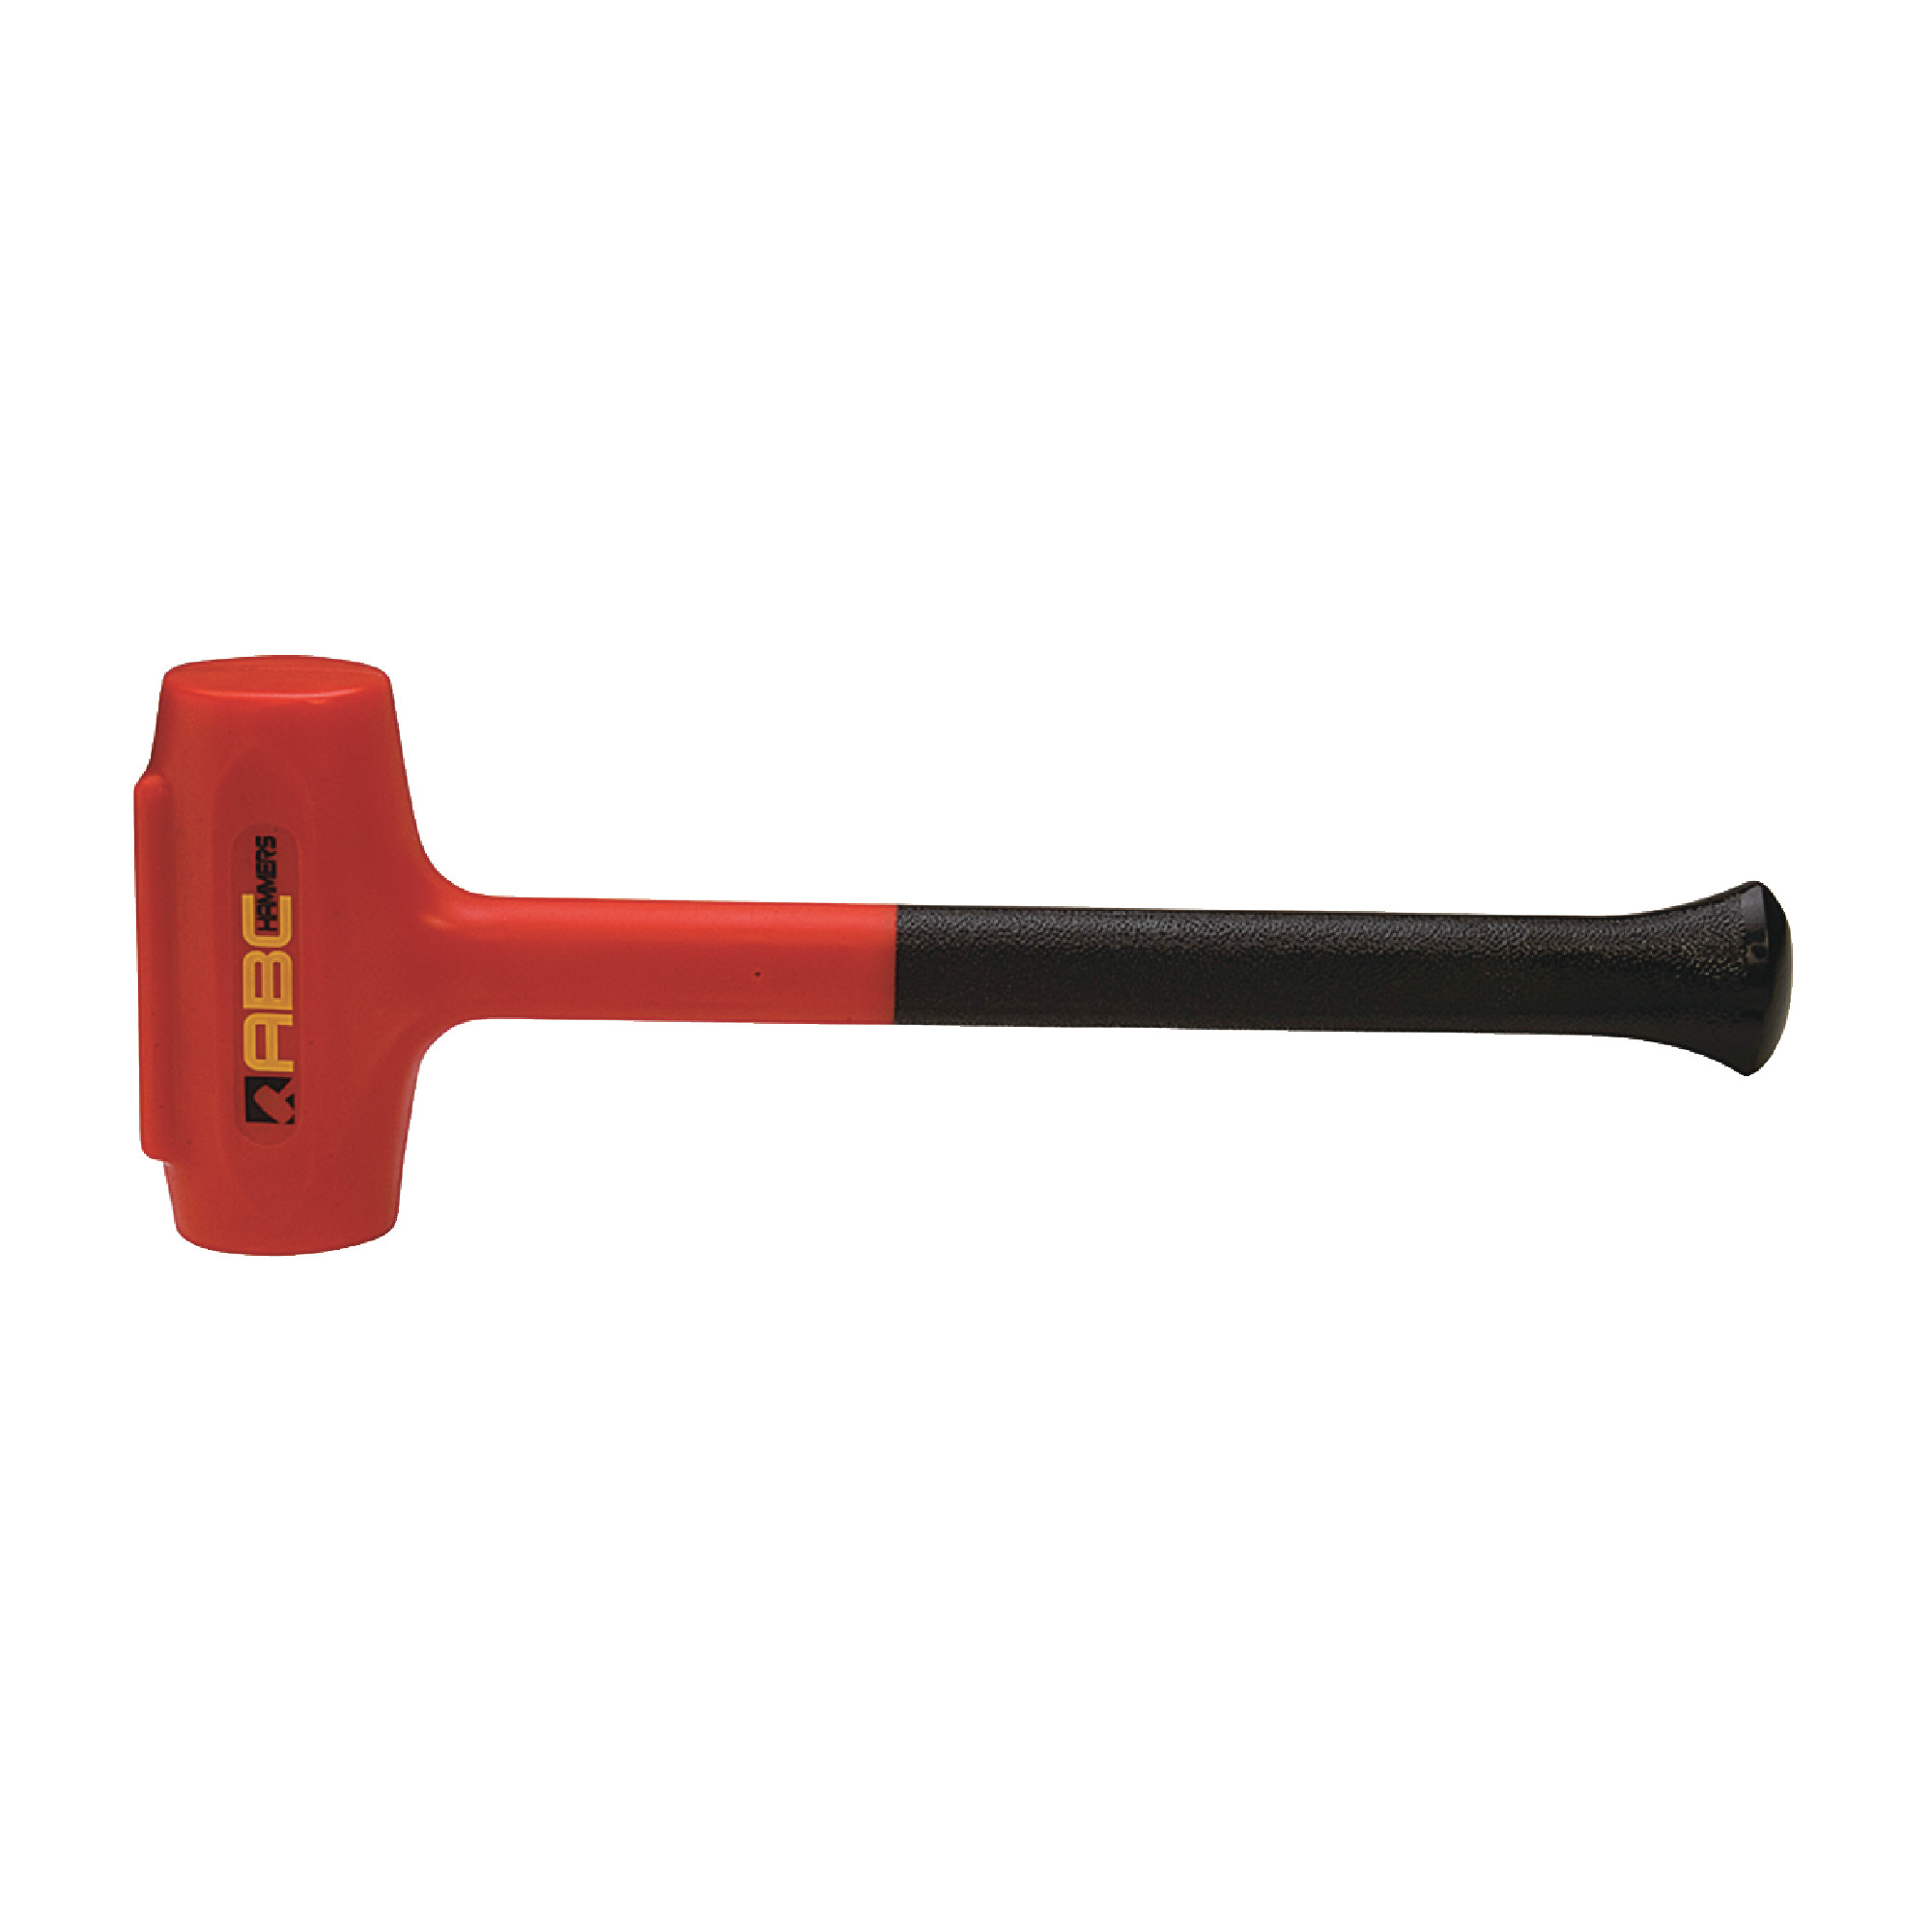 5.5 lb. Polyurethane Dead Blow Hammer, Overall Length 20"